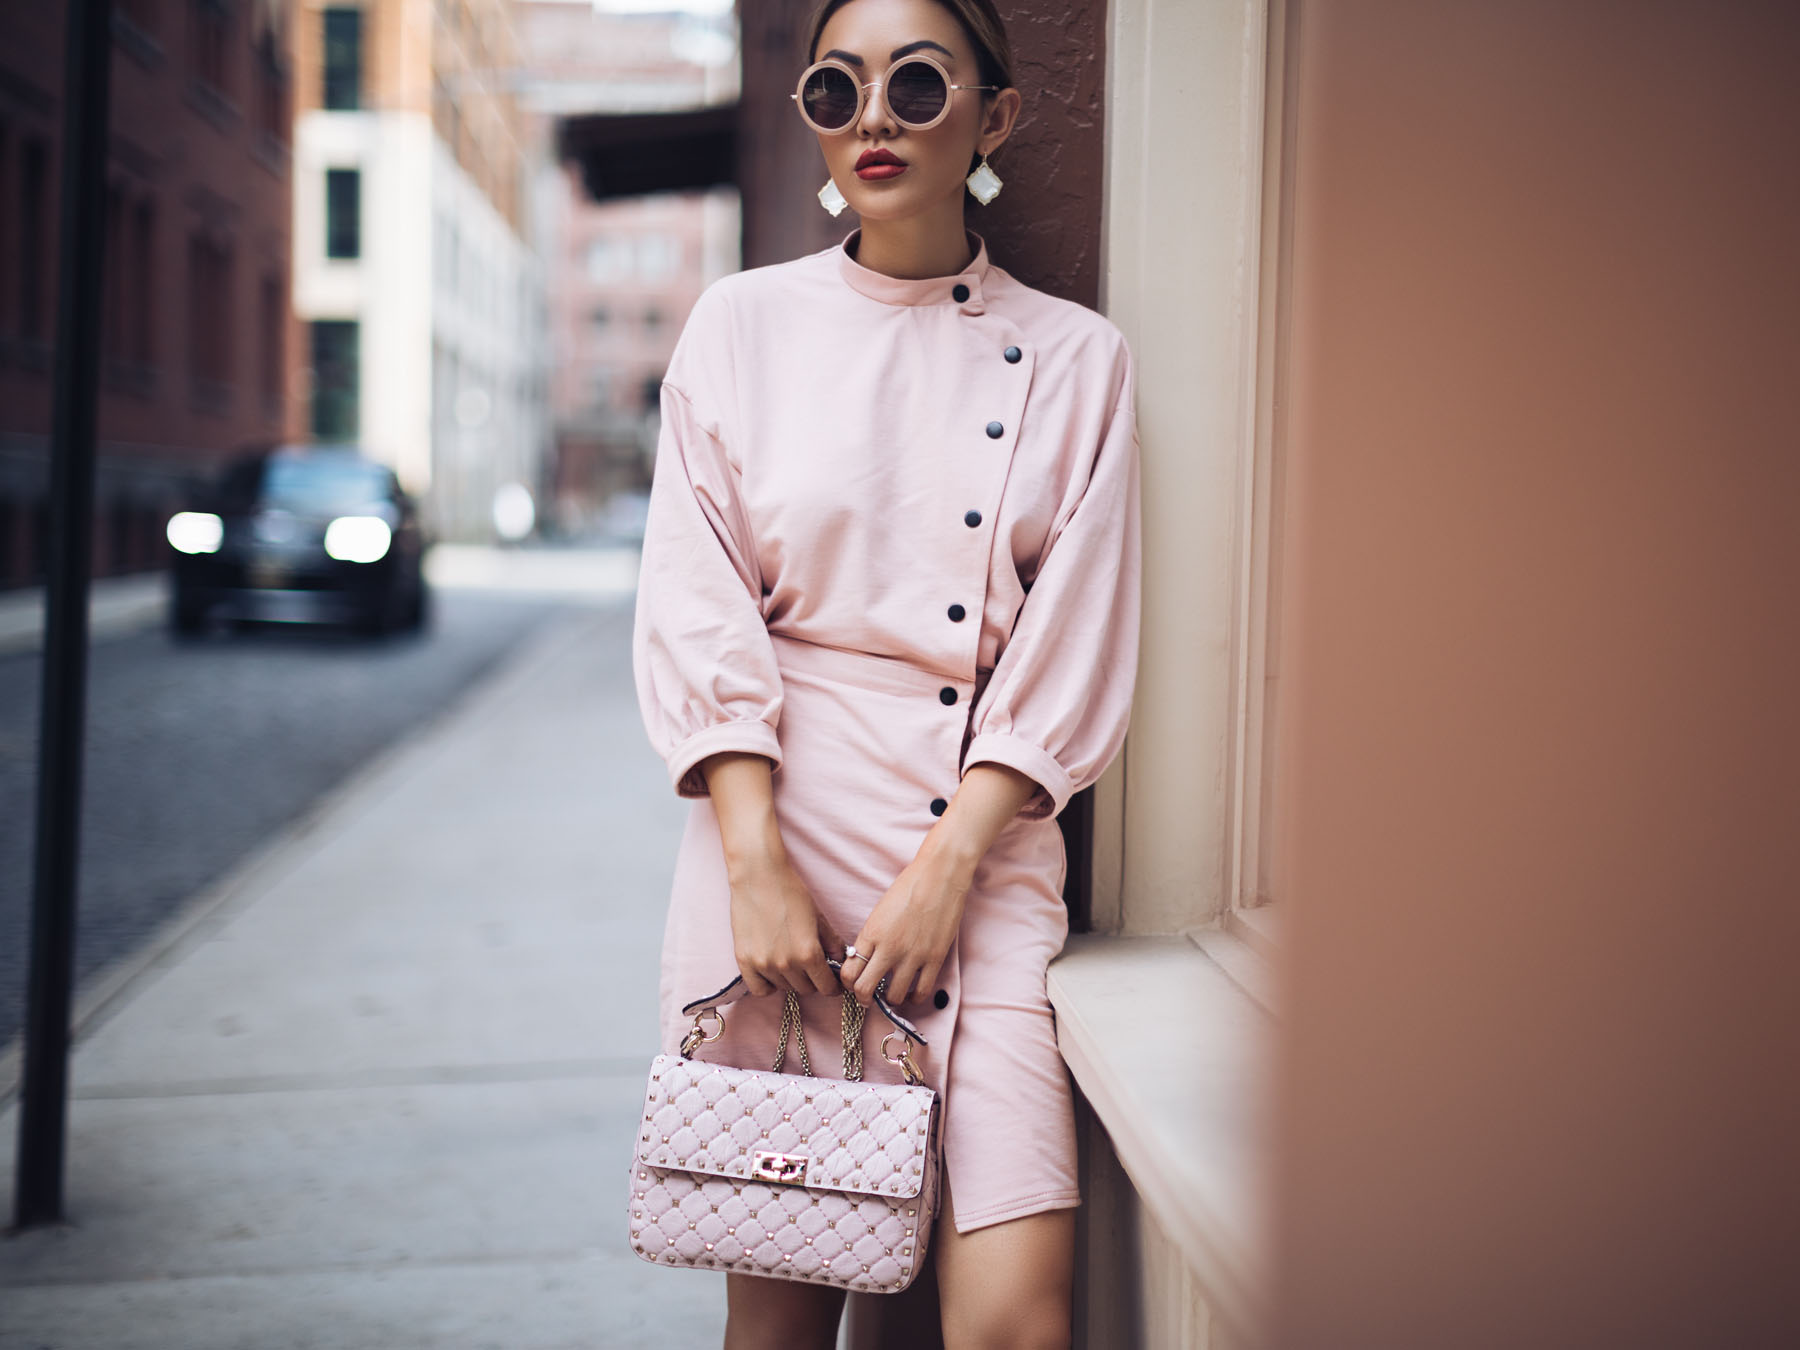 Monochromatic Winter Looks - Blush Pink Monochrome Street Style // NotJessFashion.com